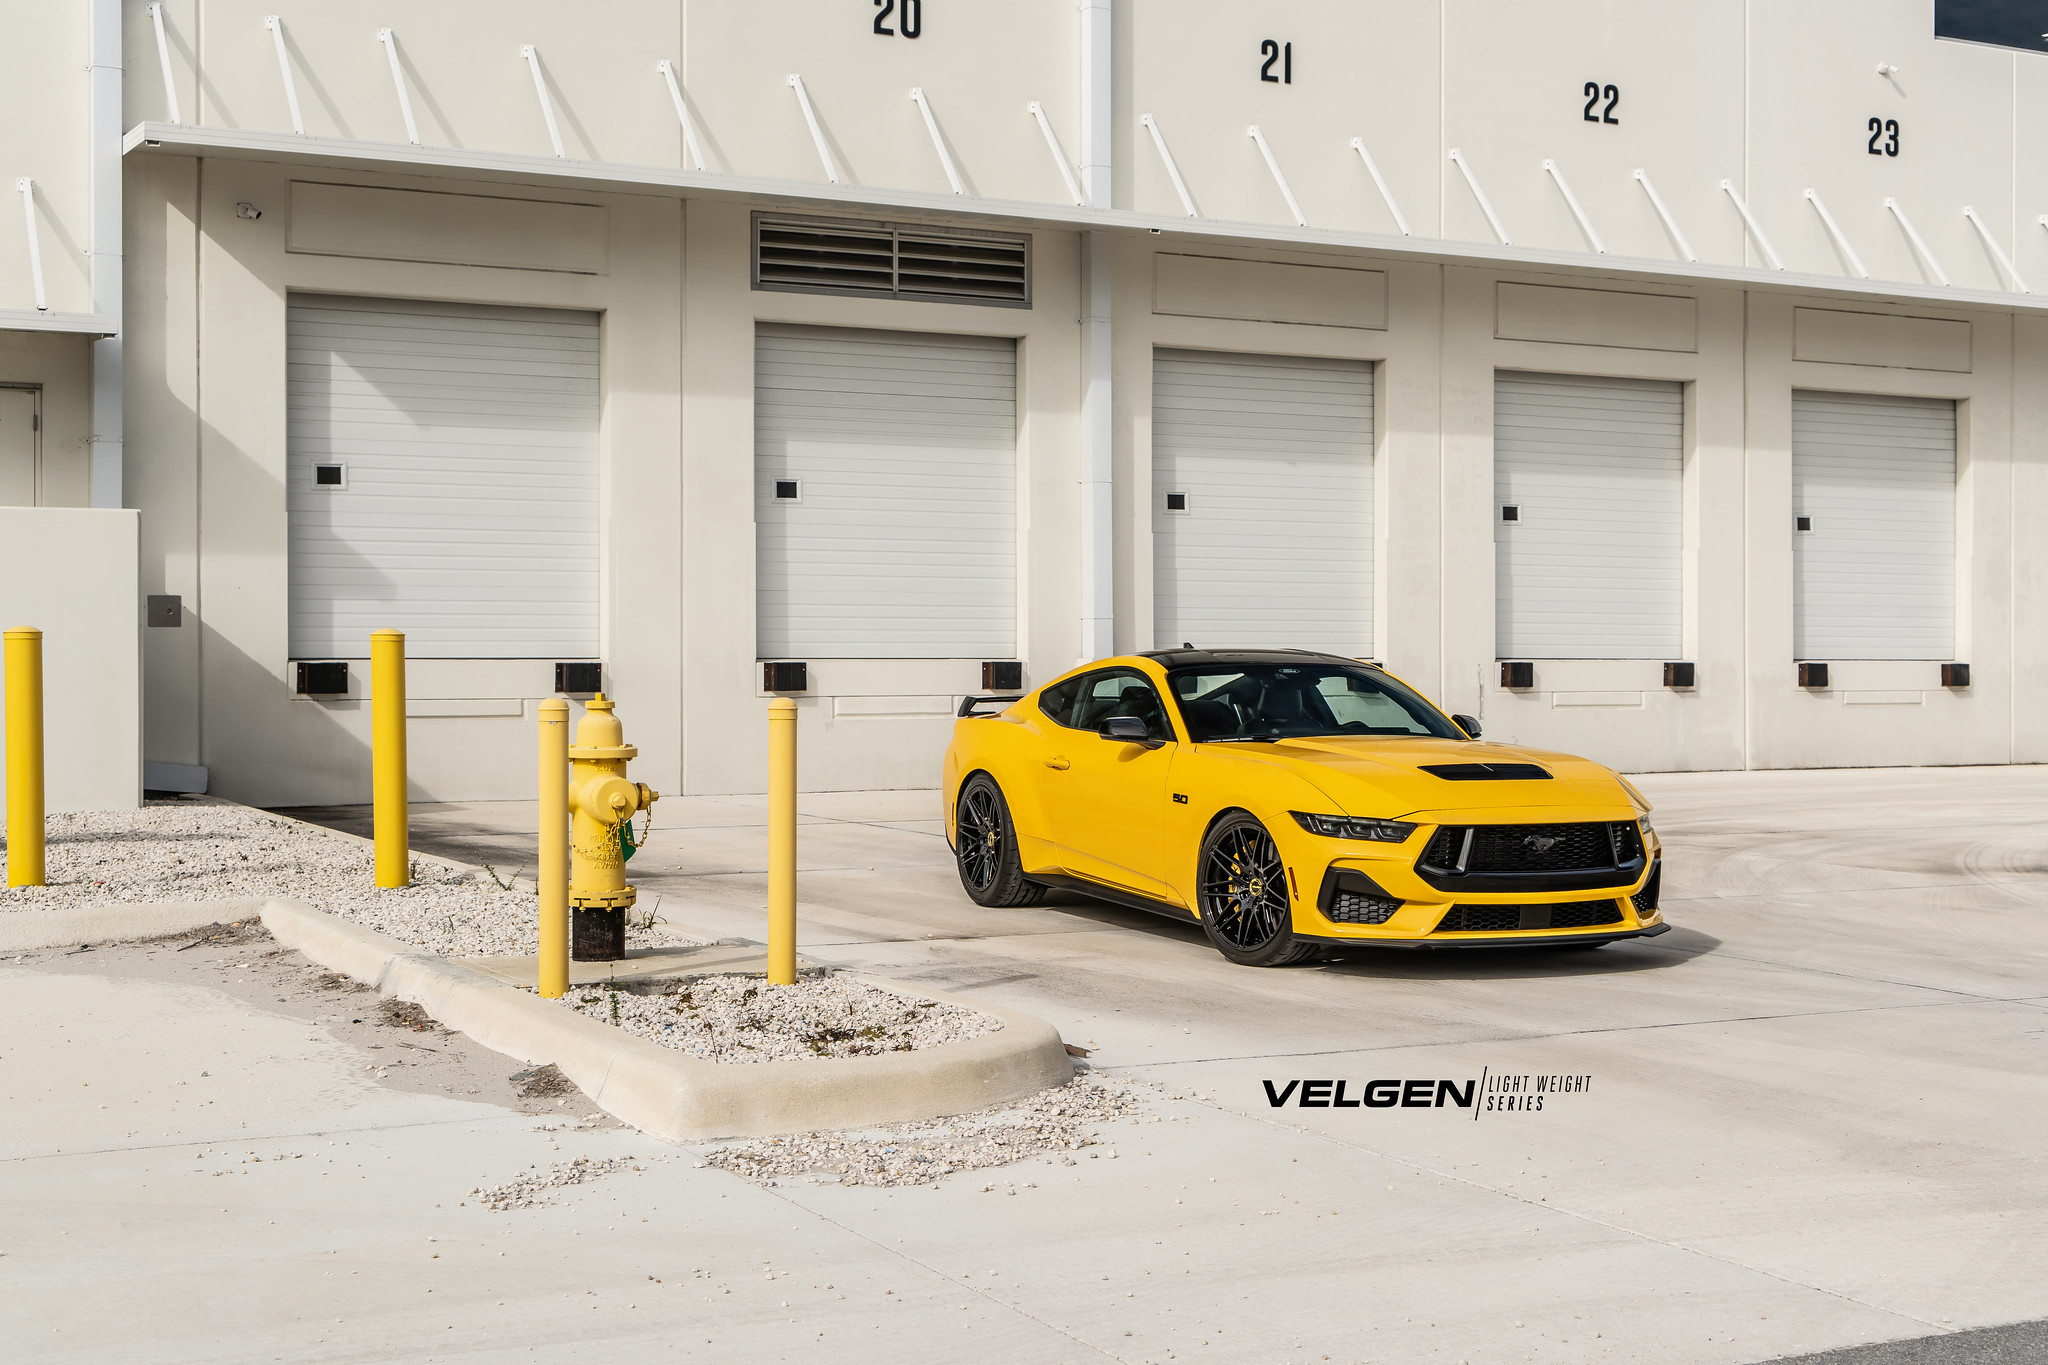 S650 Mustang Velgen wheels for your S650 Mustang | Vibe Motorsports 53445453855_aaae9c44a5_k